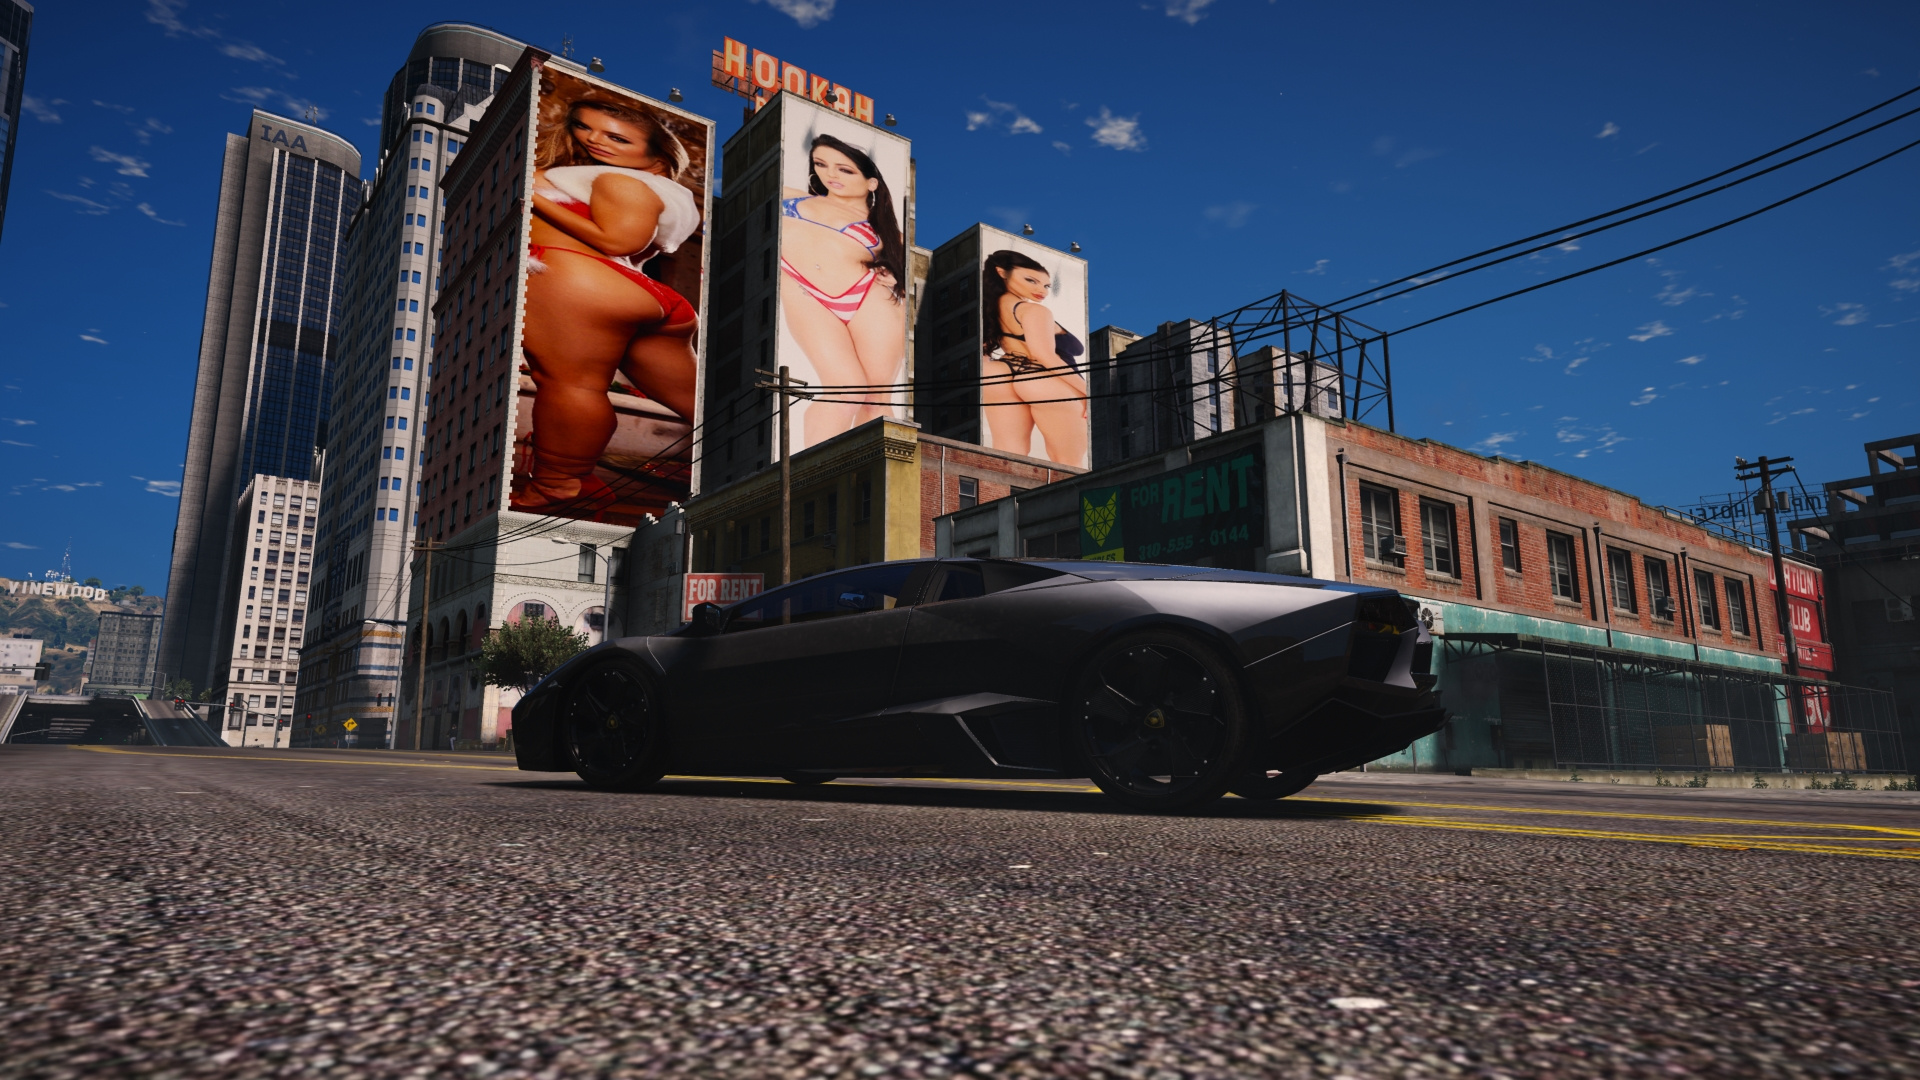  Grand Theft Auto high quality mods and tutorials